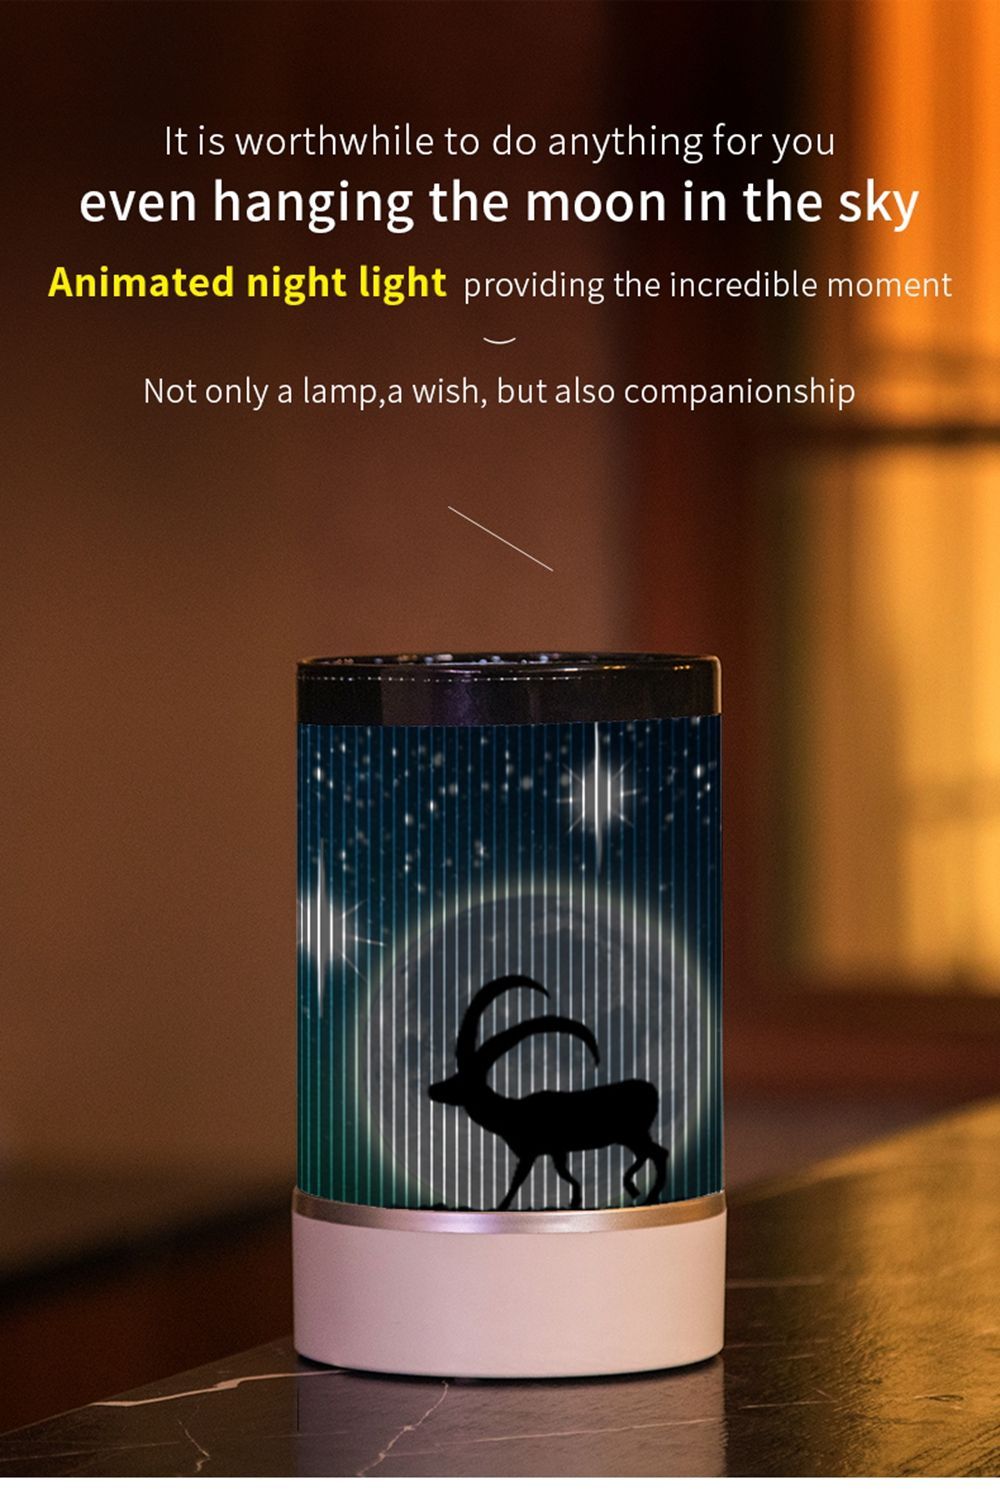 DC5V-USB-LED-4-Pattern-Animated-Night-Light-Remote-Control-for-Kids-Bedroom-1577748